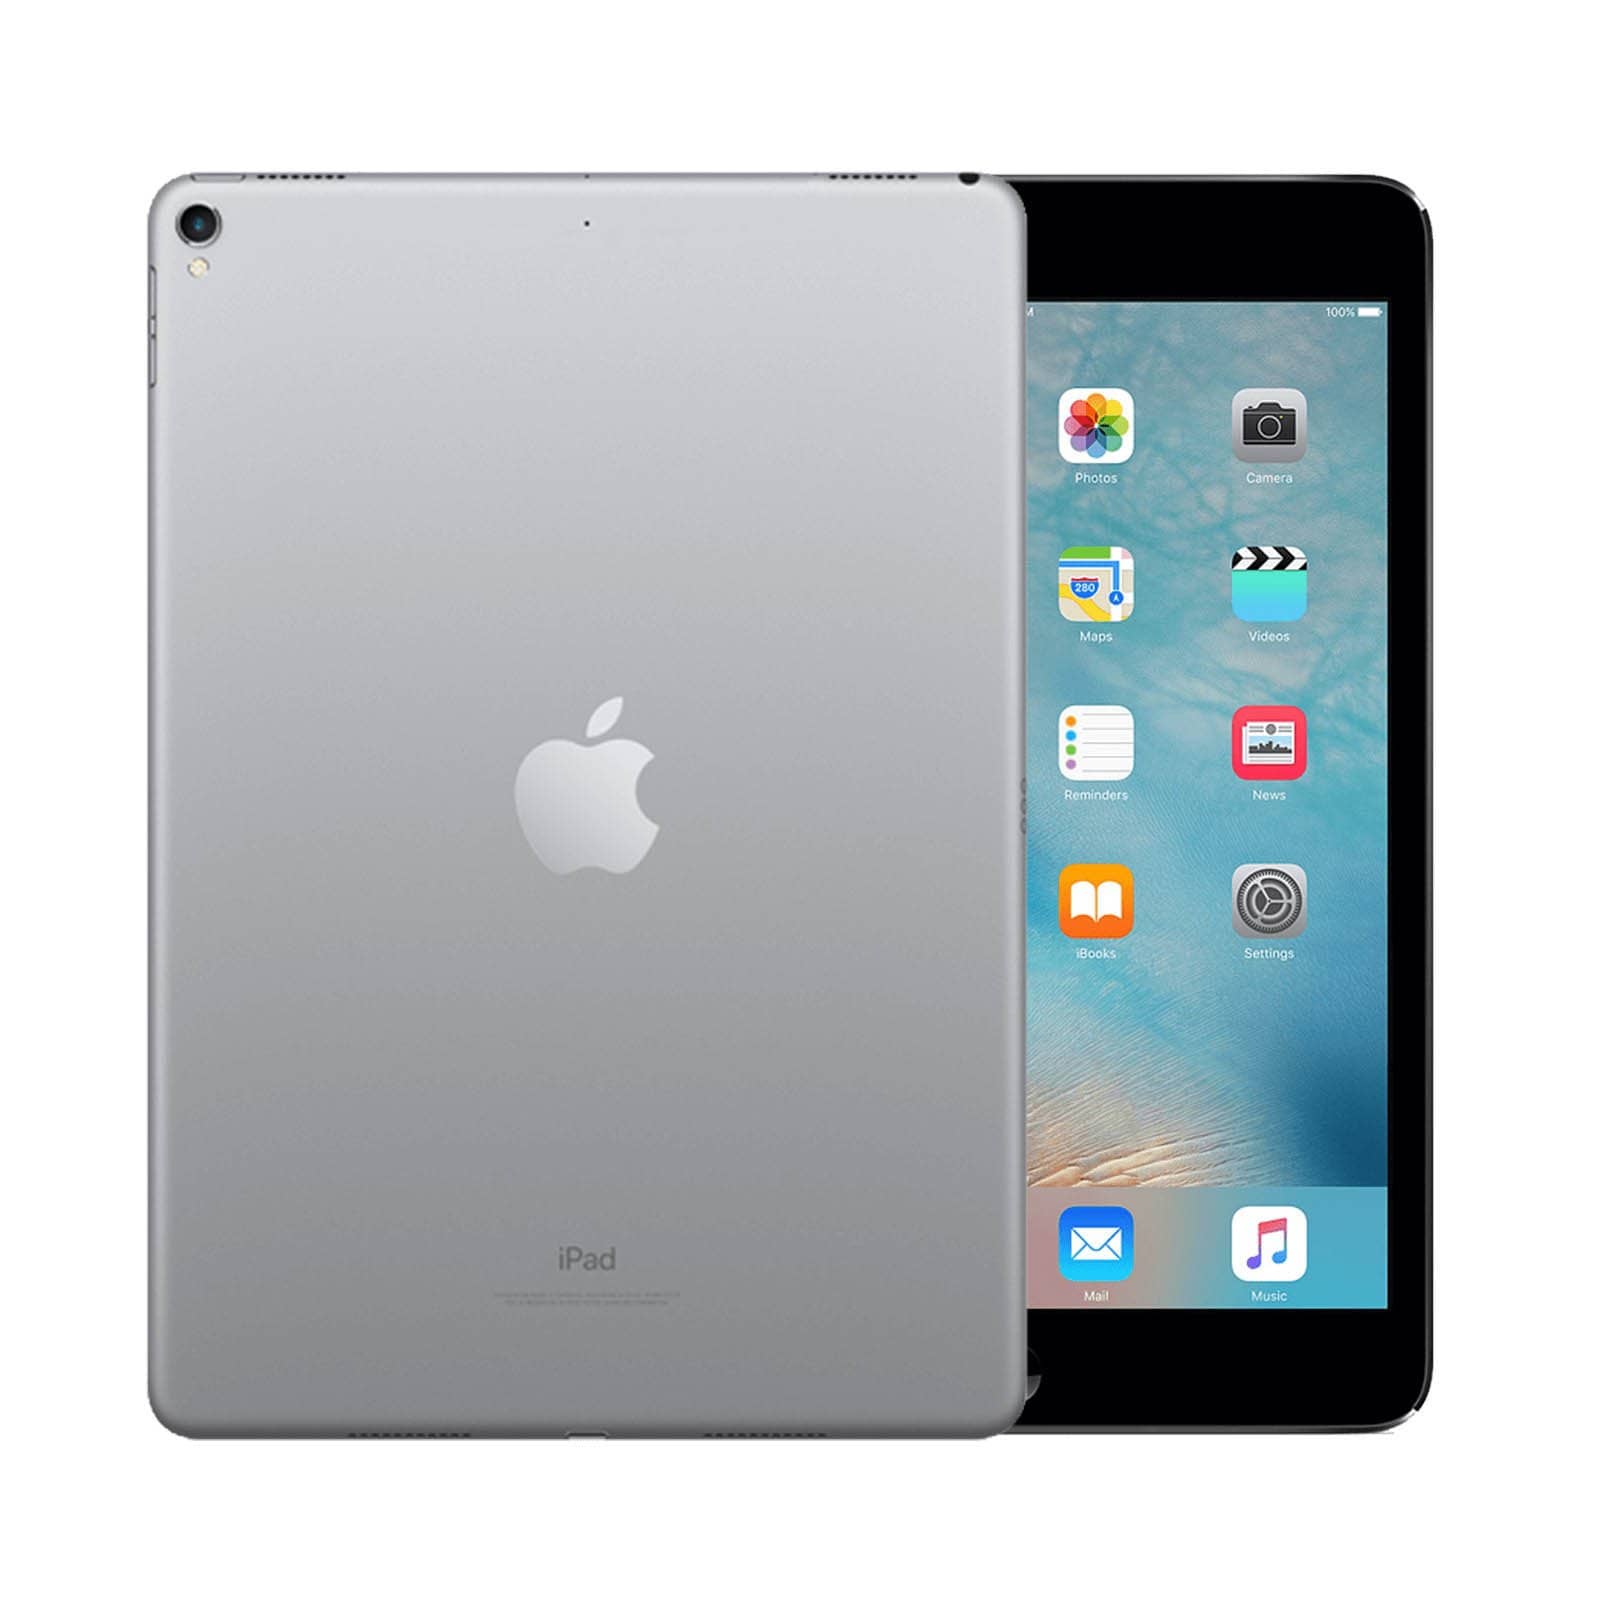 iPad Pro 9.7 Inch 256GB Space Grey Good - WiFi 256GB Space Grey Good